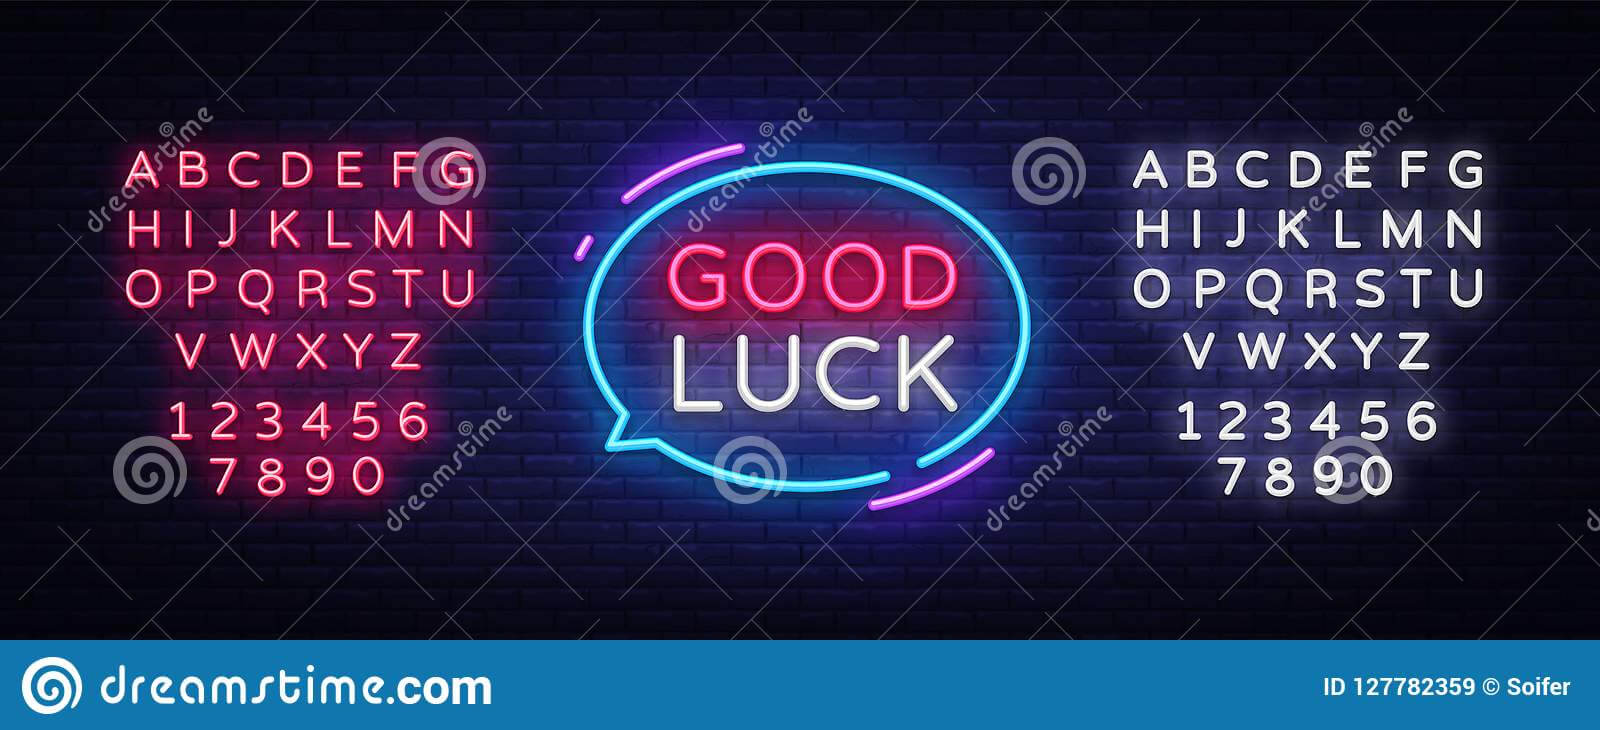 Good Luck Neon Text Vector. Good Luck Neon Sign, Design Pertaining To Good Luck Banner Template